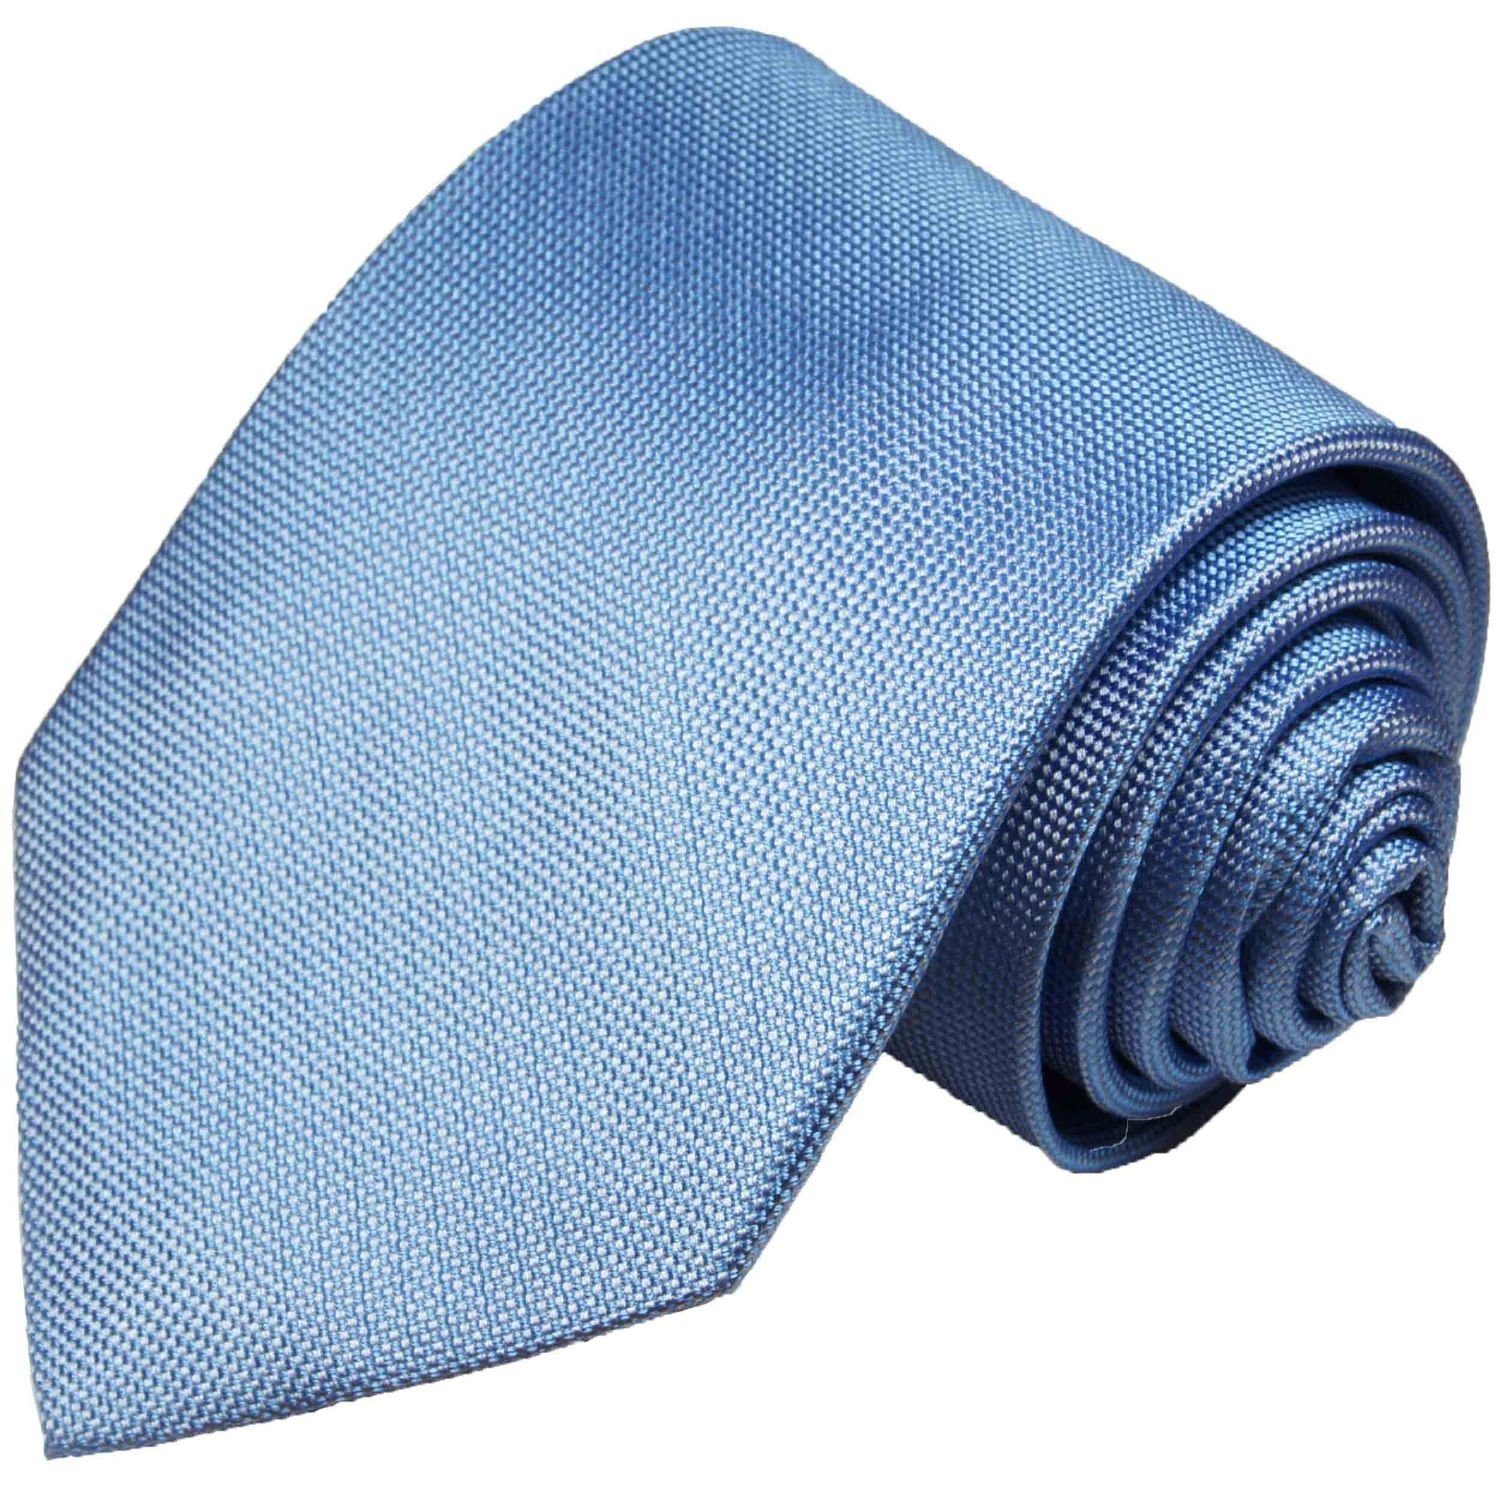 Paul Malone Krawatte Schlips Schmal Seide Seidenkrawatte Designer modern blau uni Herren (6cm), 100% 898